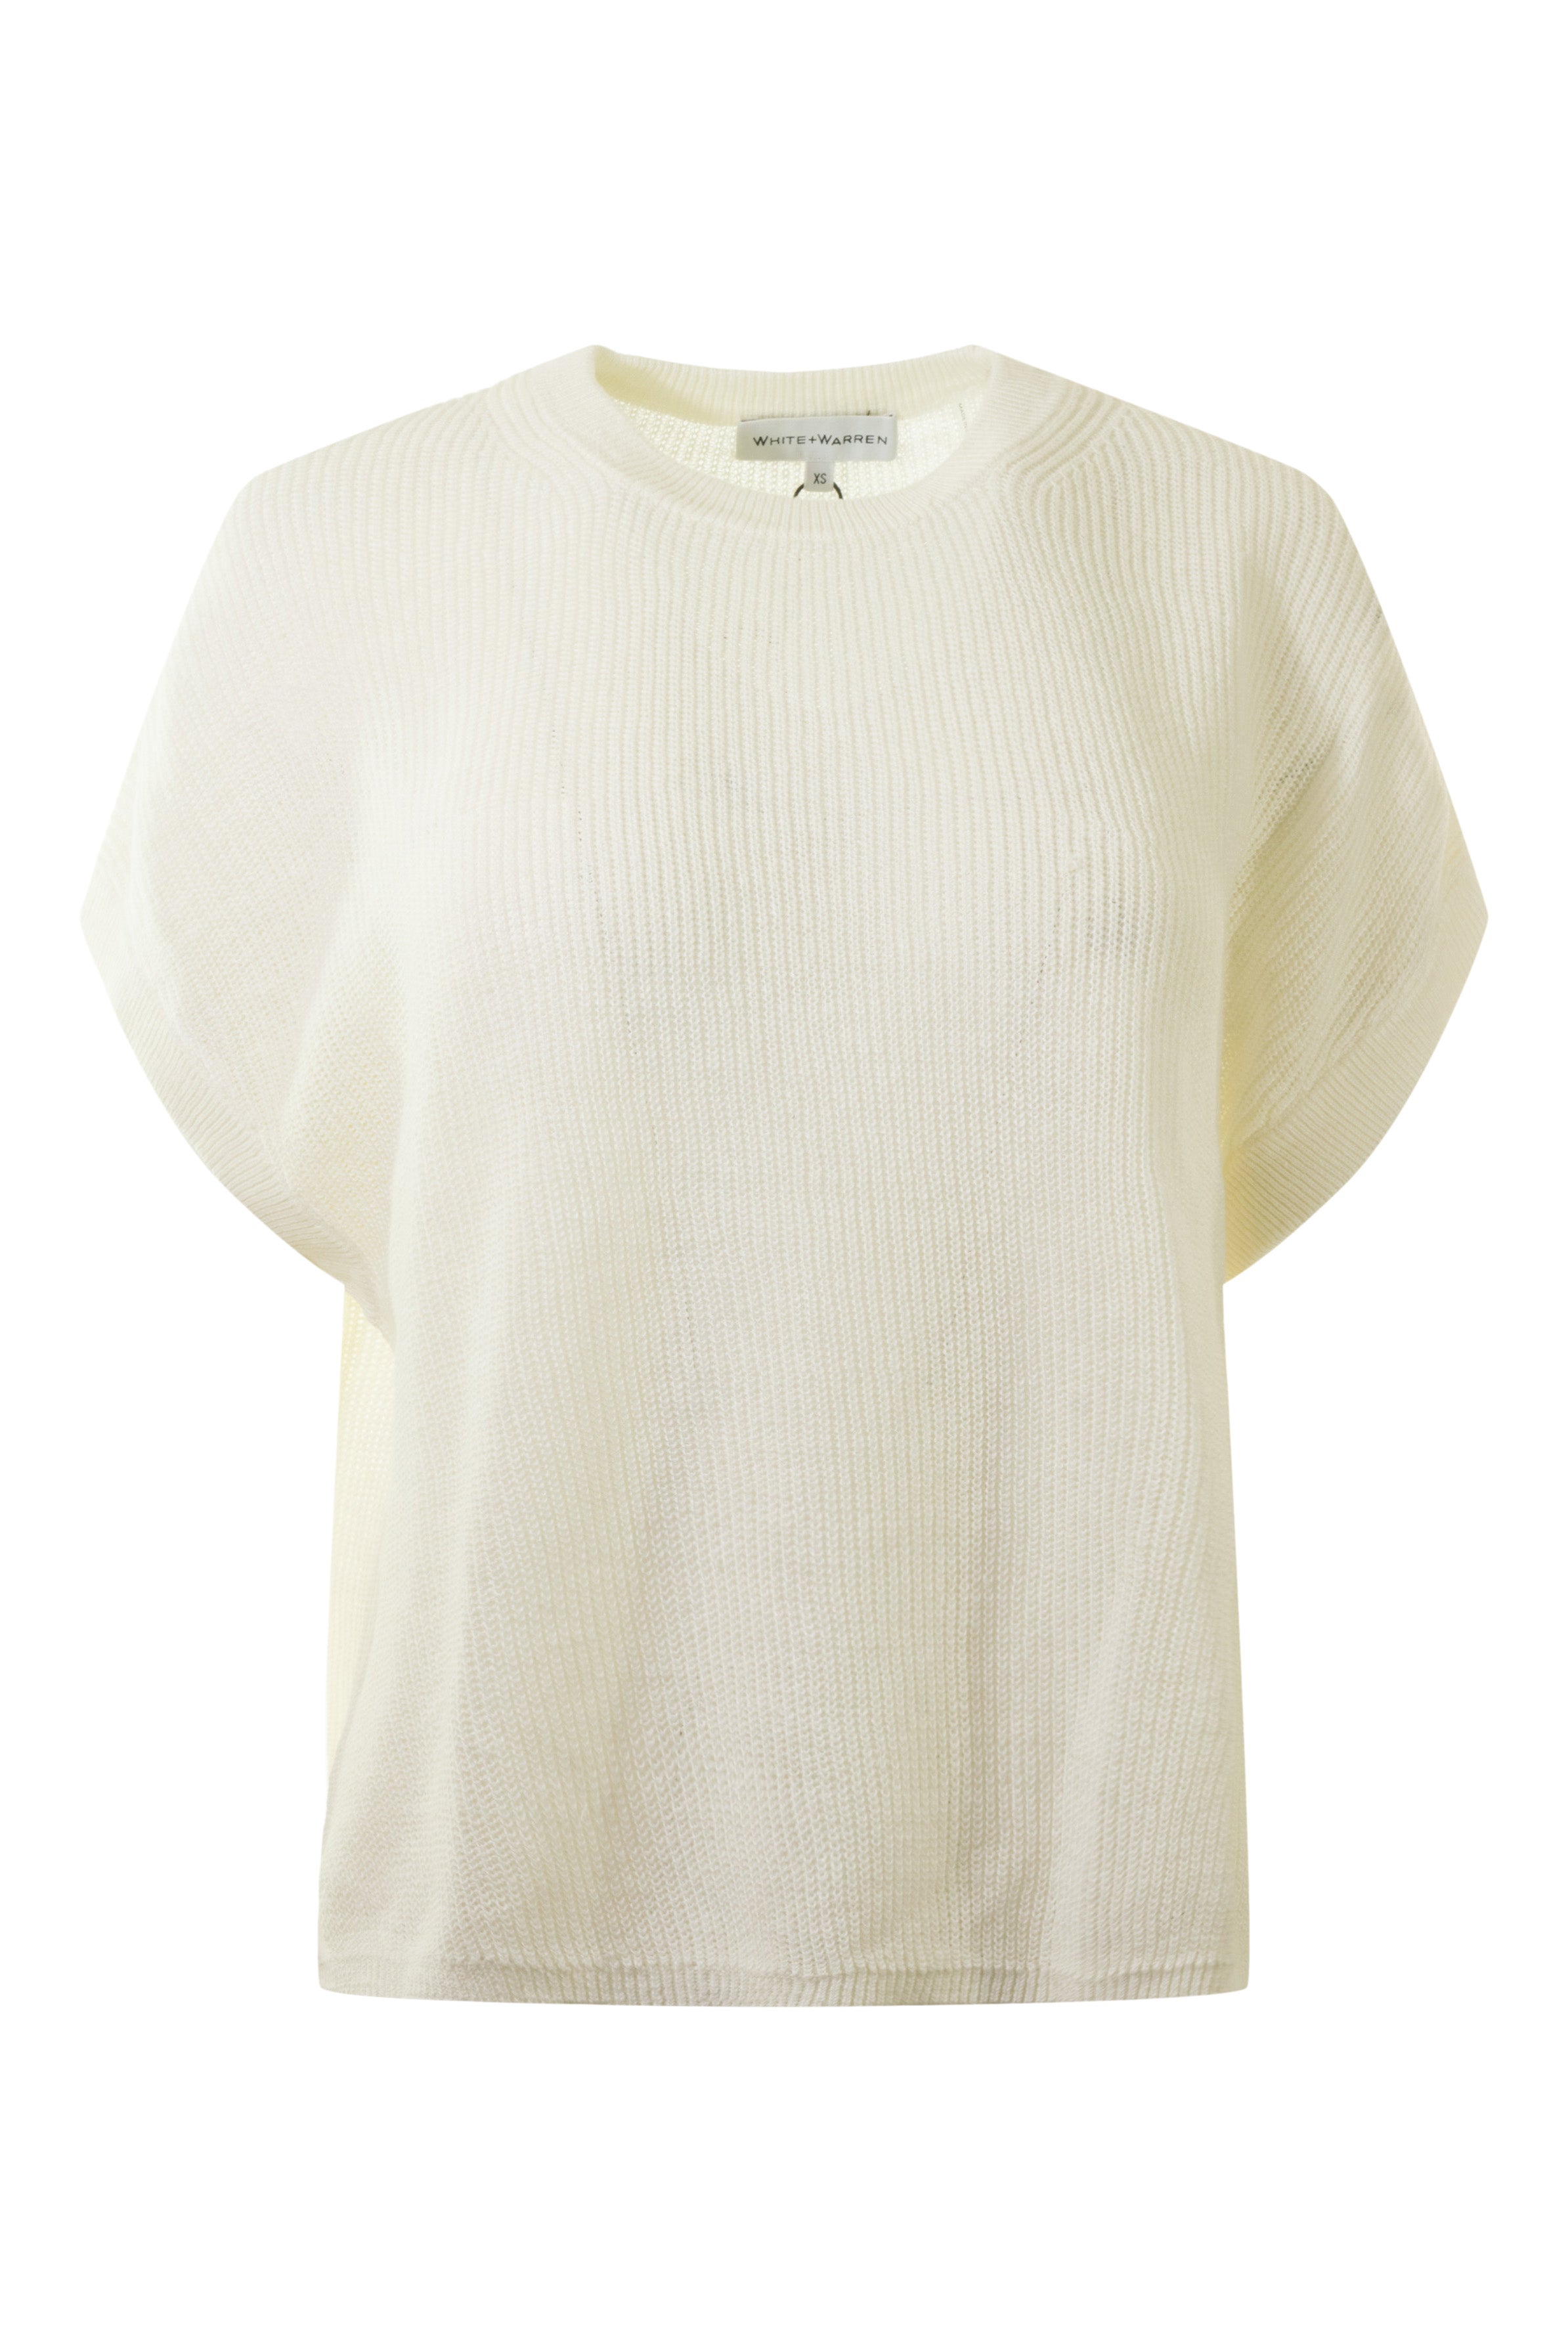 White & Warren Classic Linen Ribbed T-shirt in White